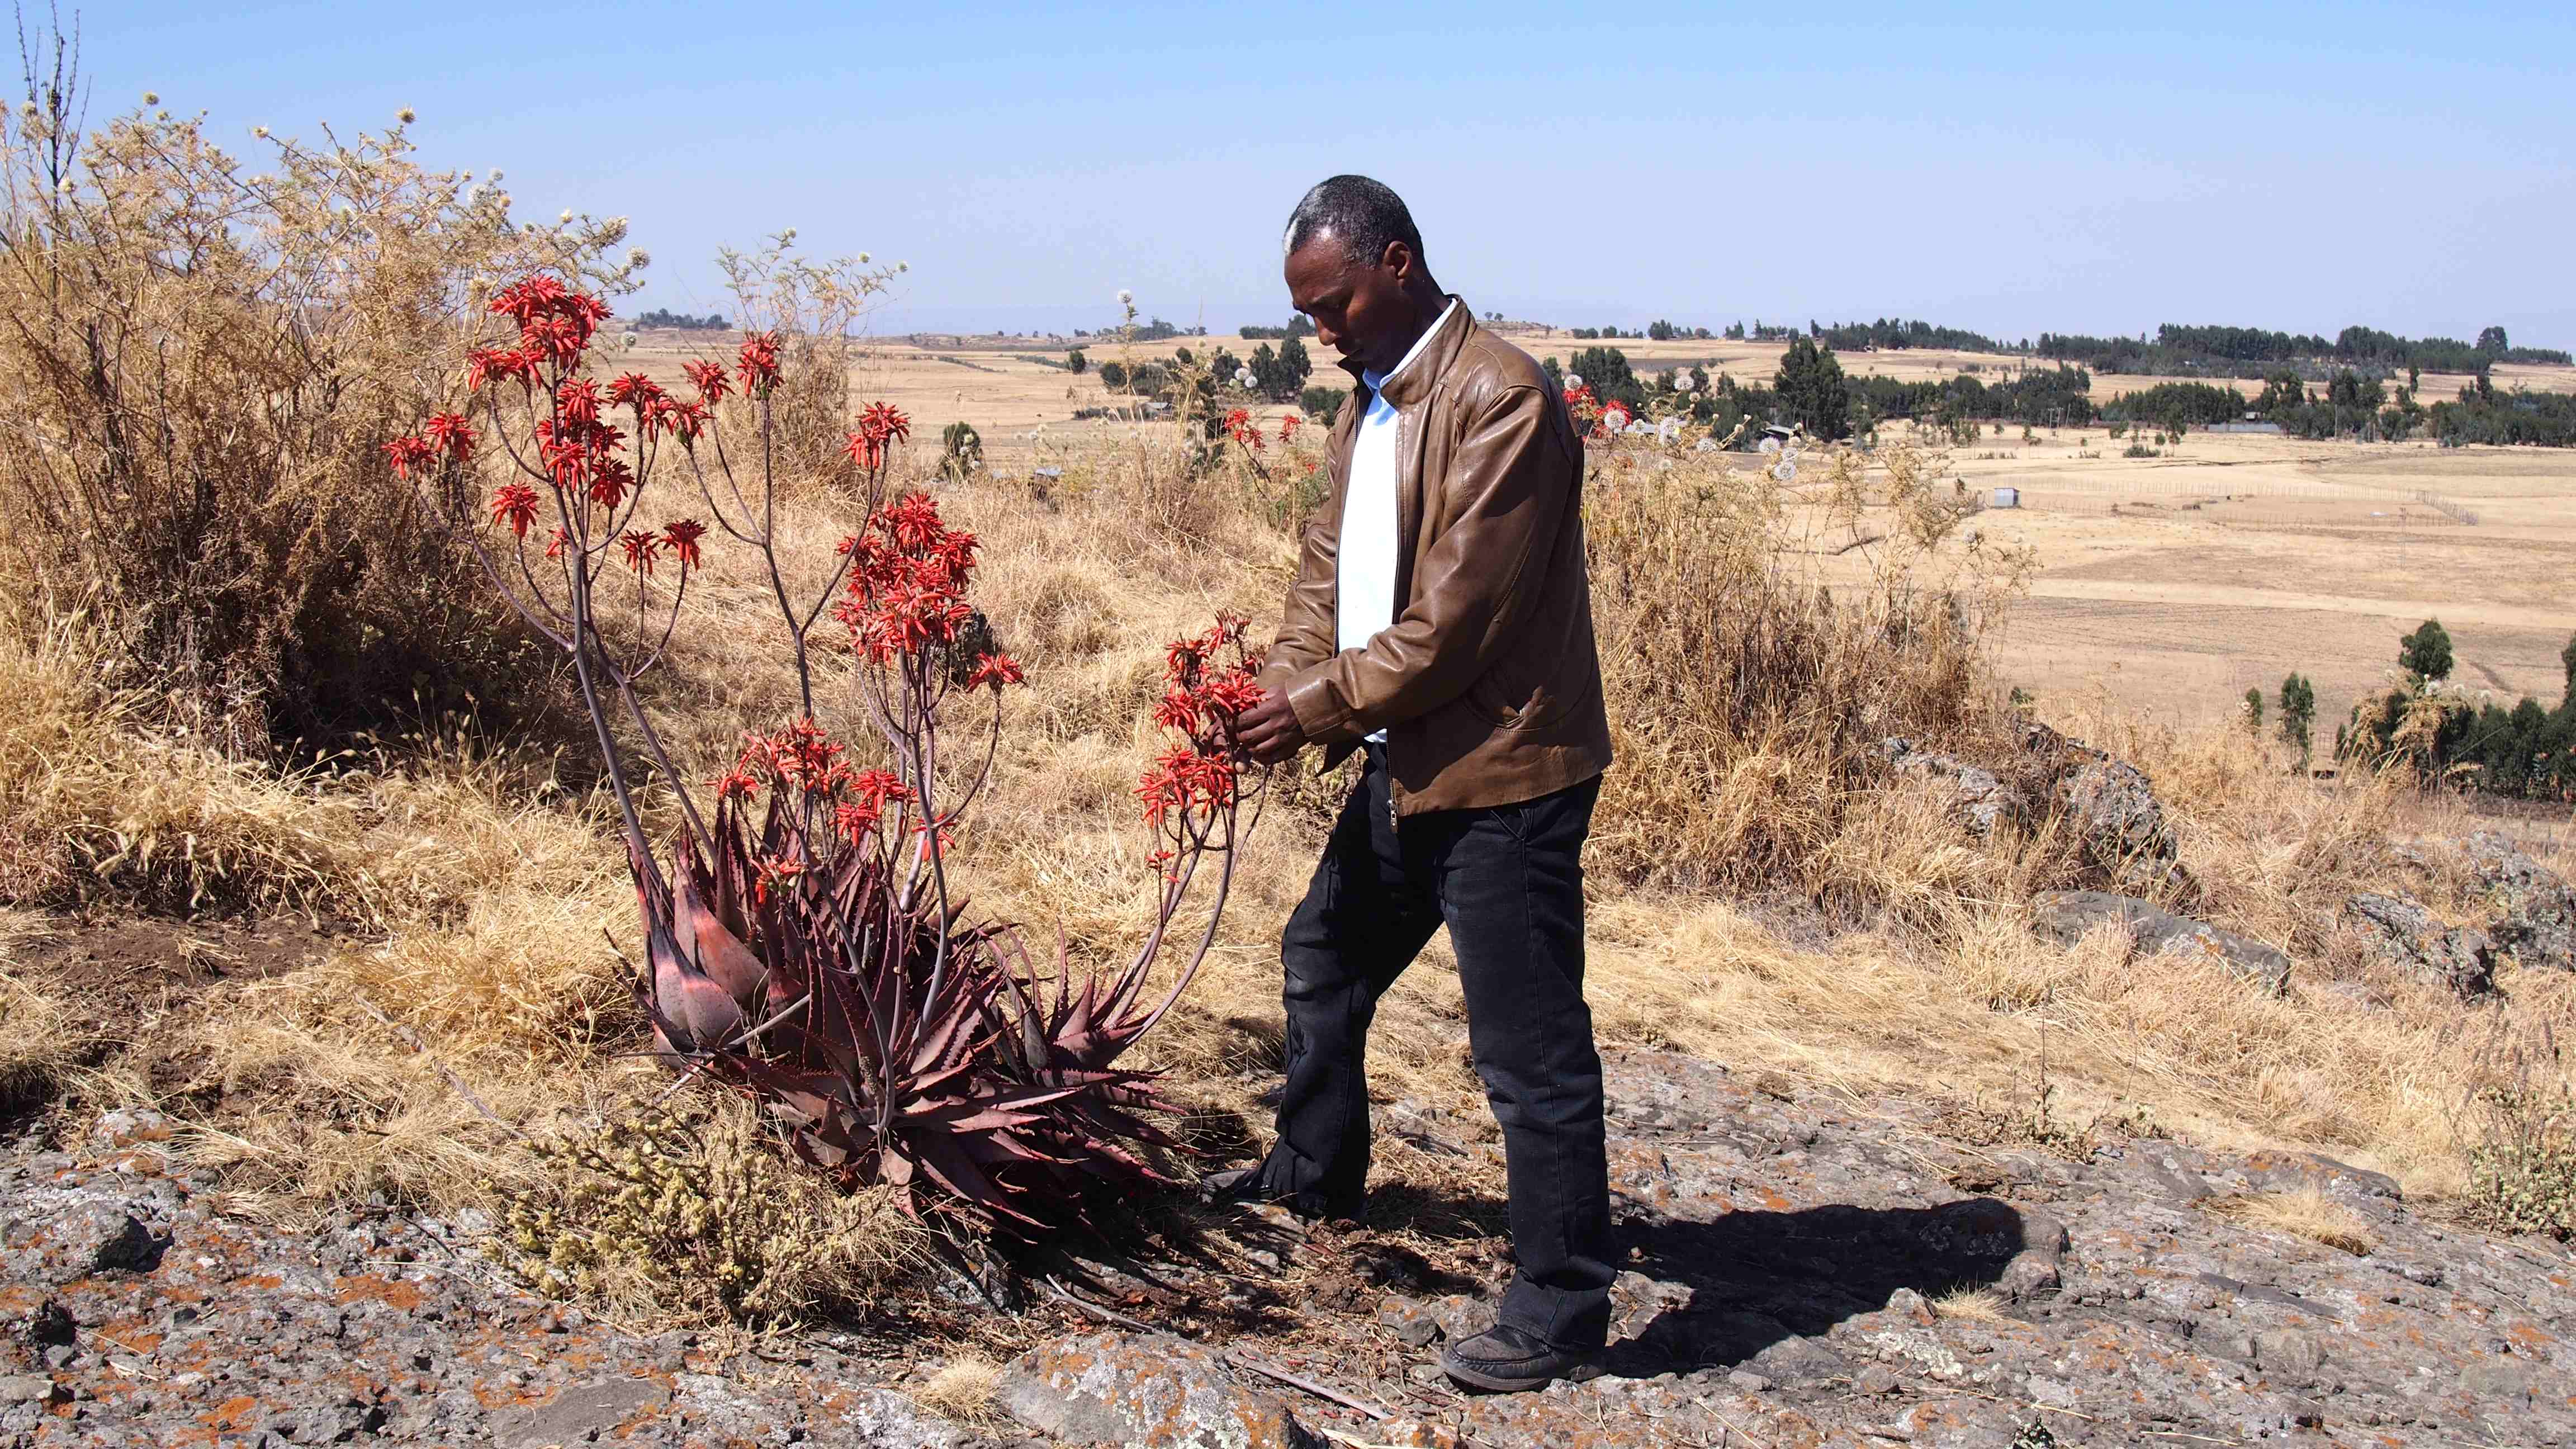 Dr Tamene Yohannes stood next to the flowering stalk of Aloe debrana